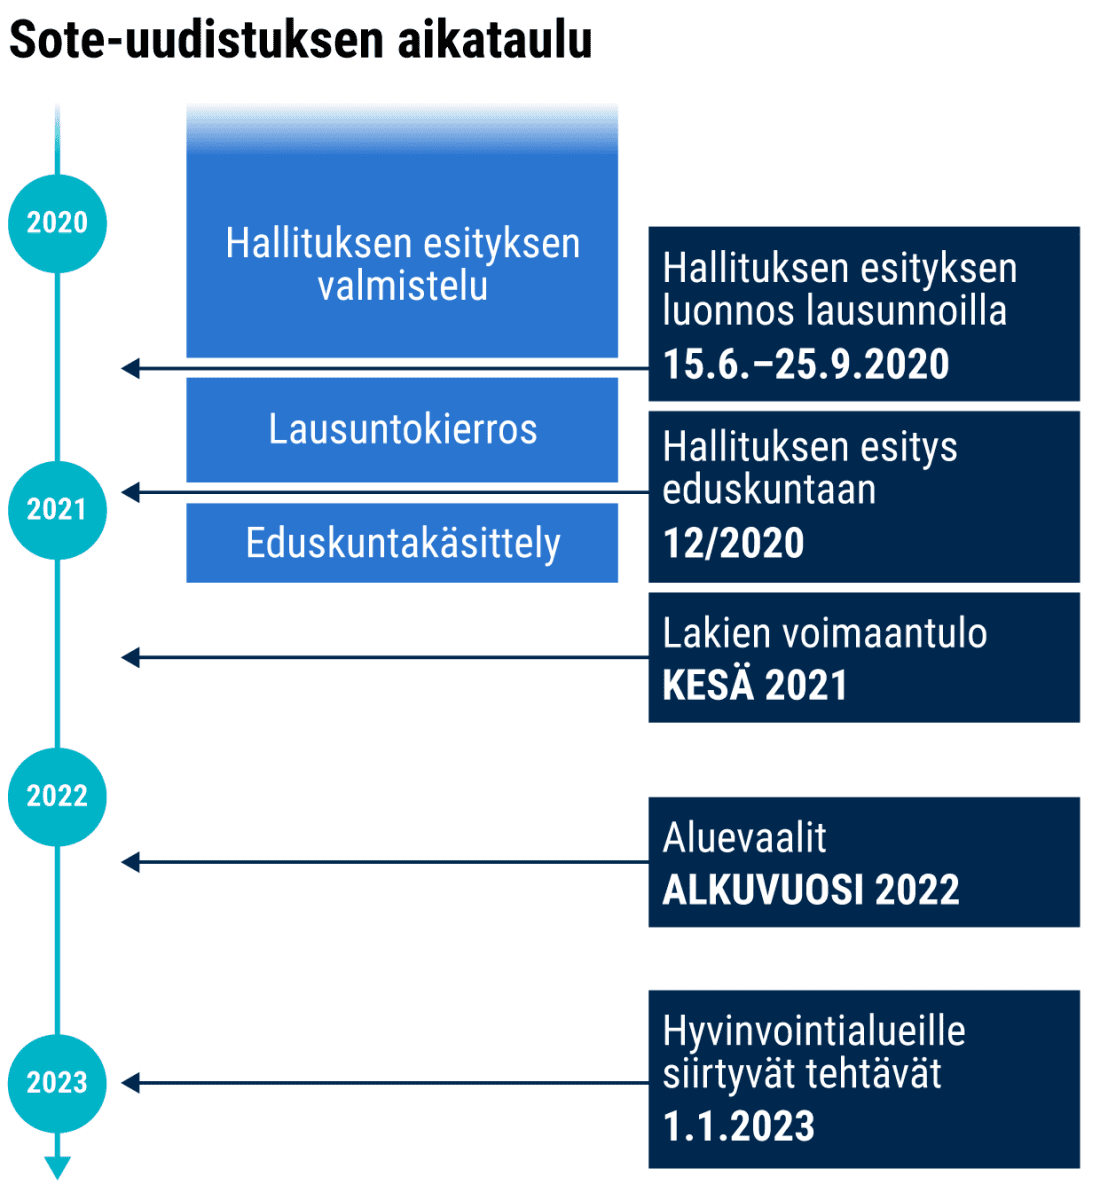 Sote-uudistuksen aikataulu 2020–2022